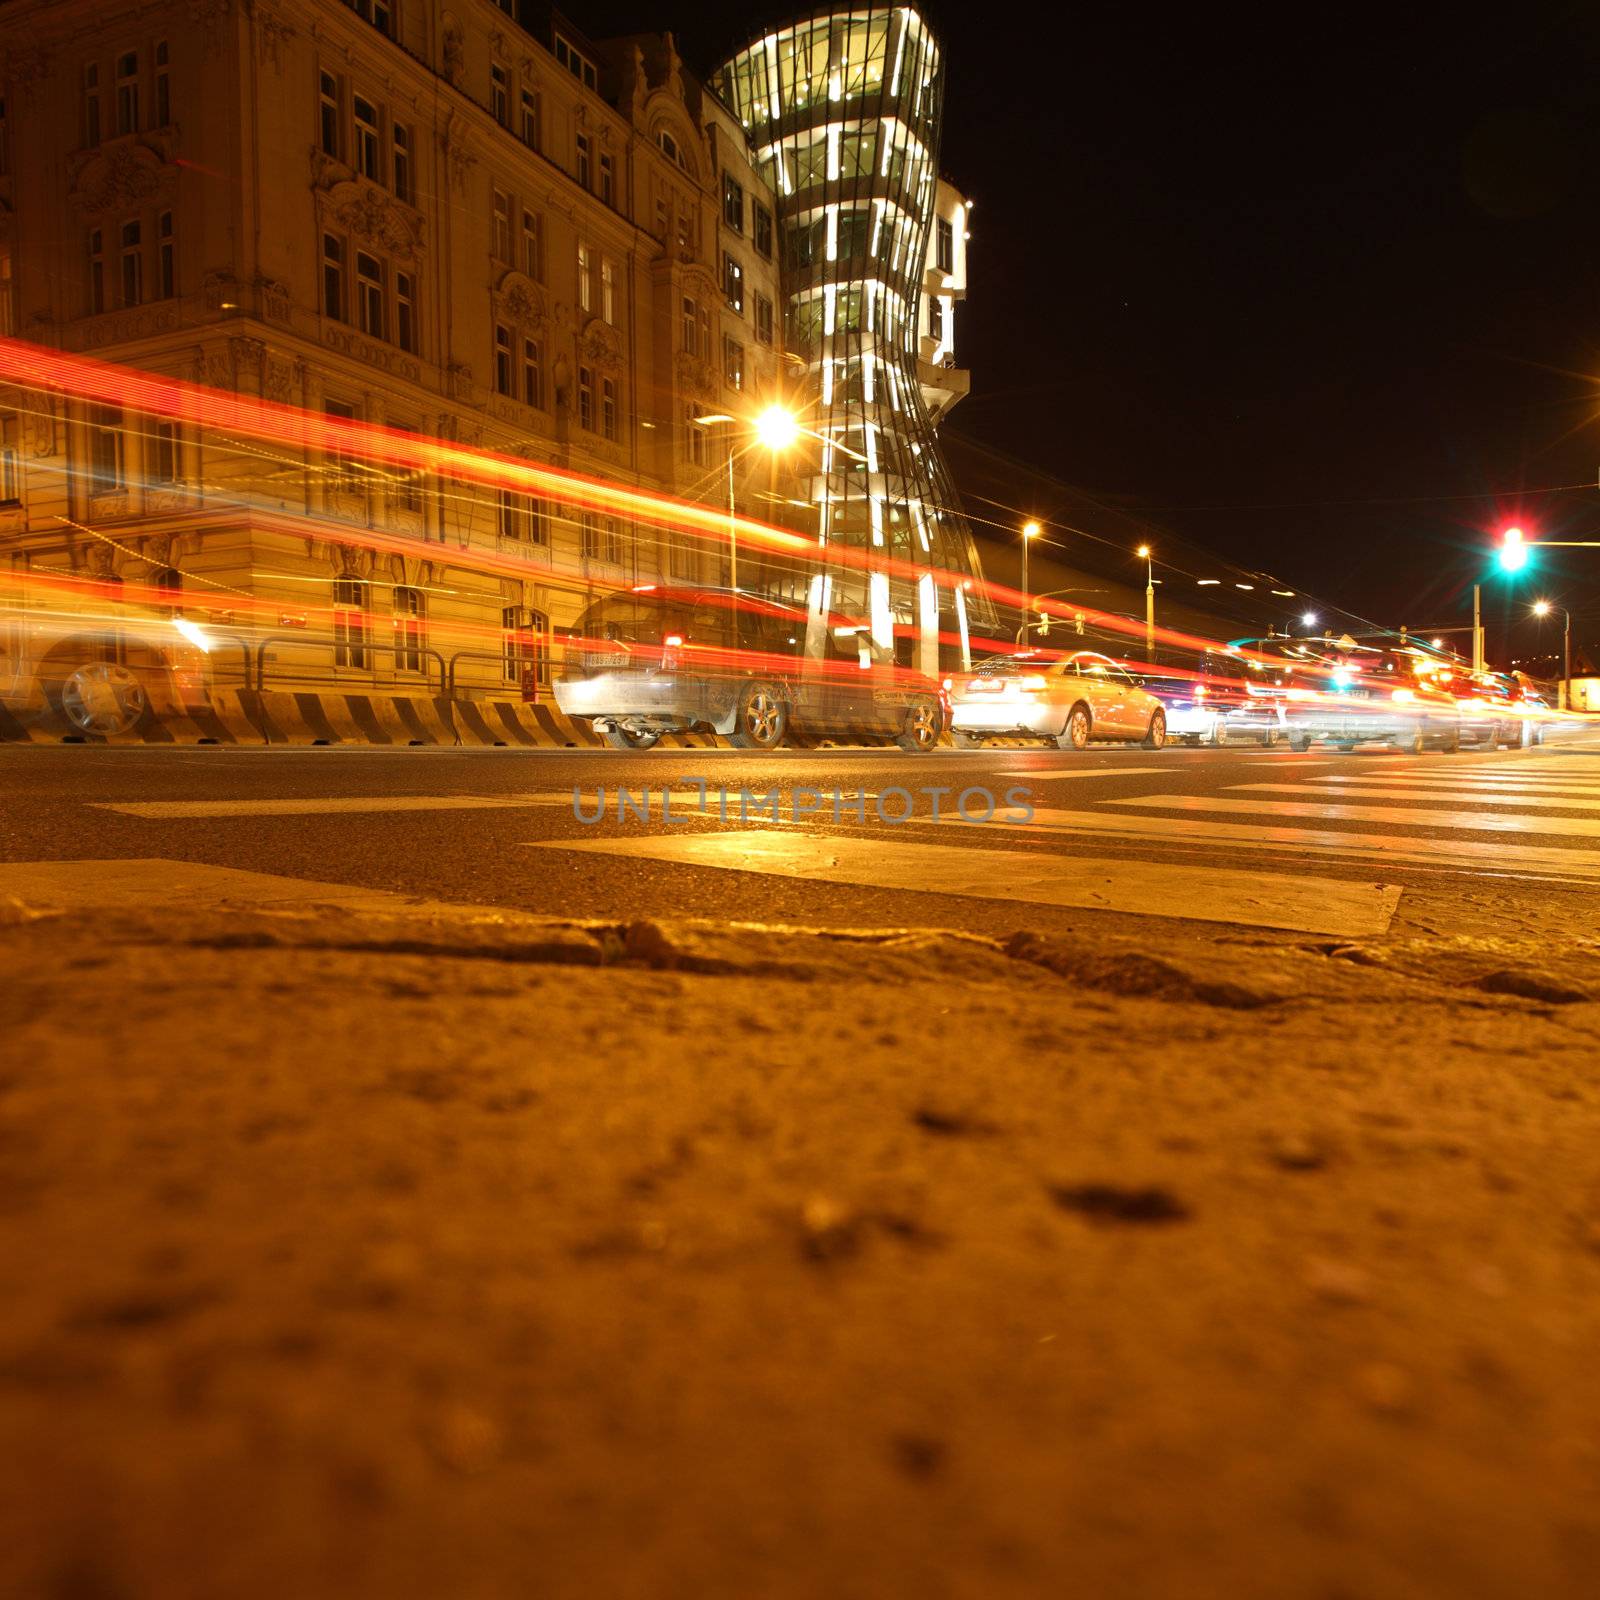 night city street by Yellowj